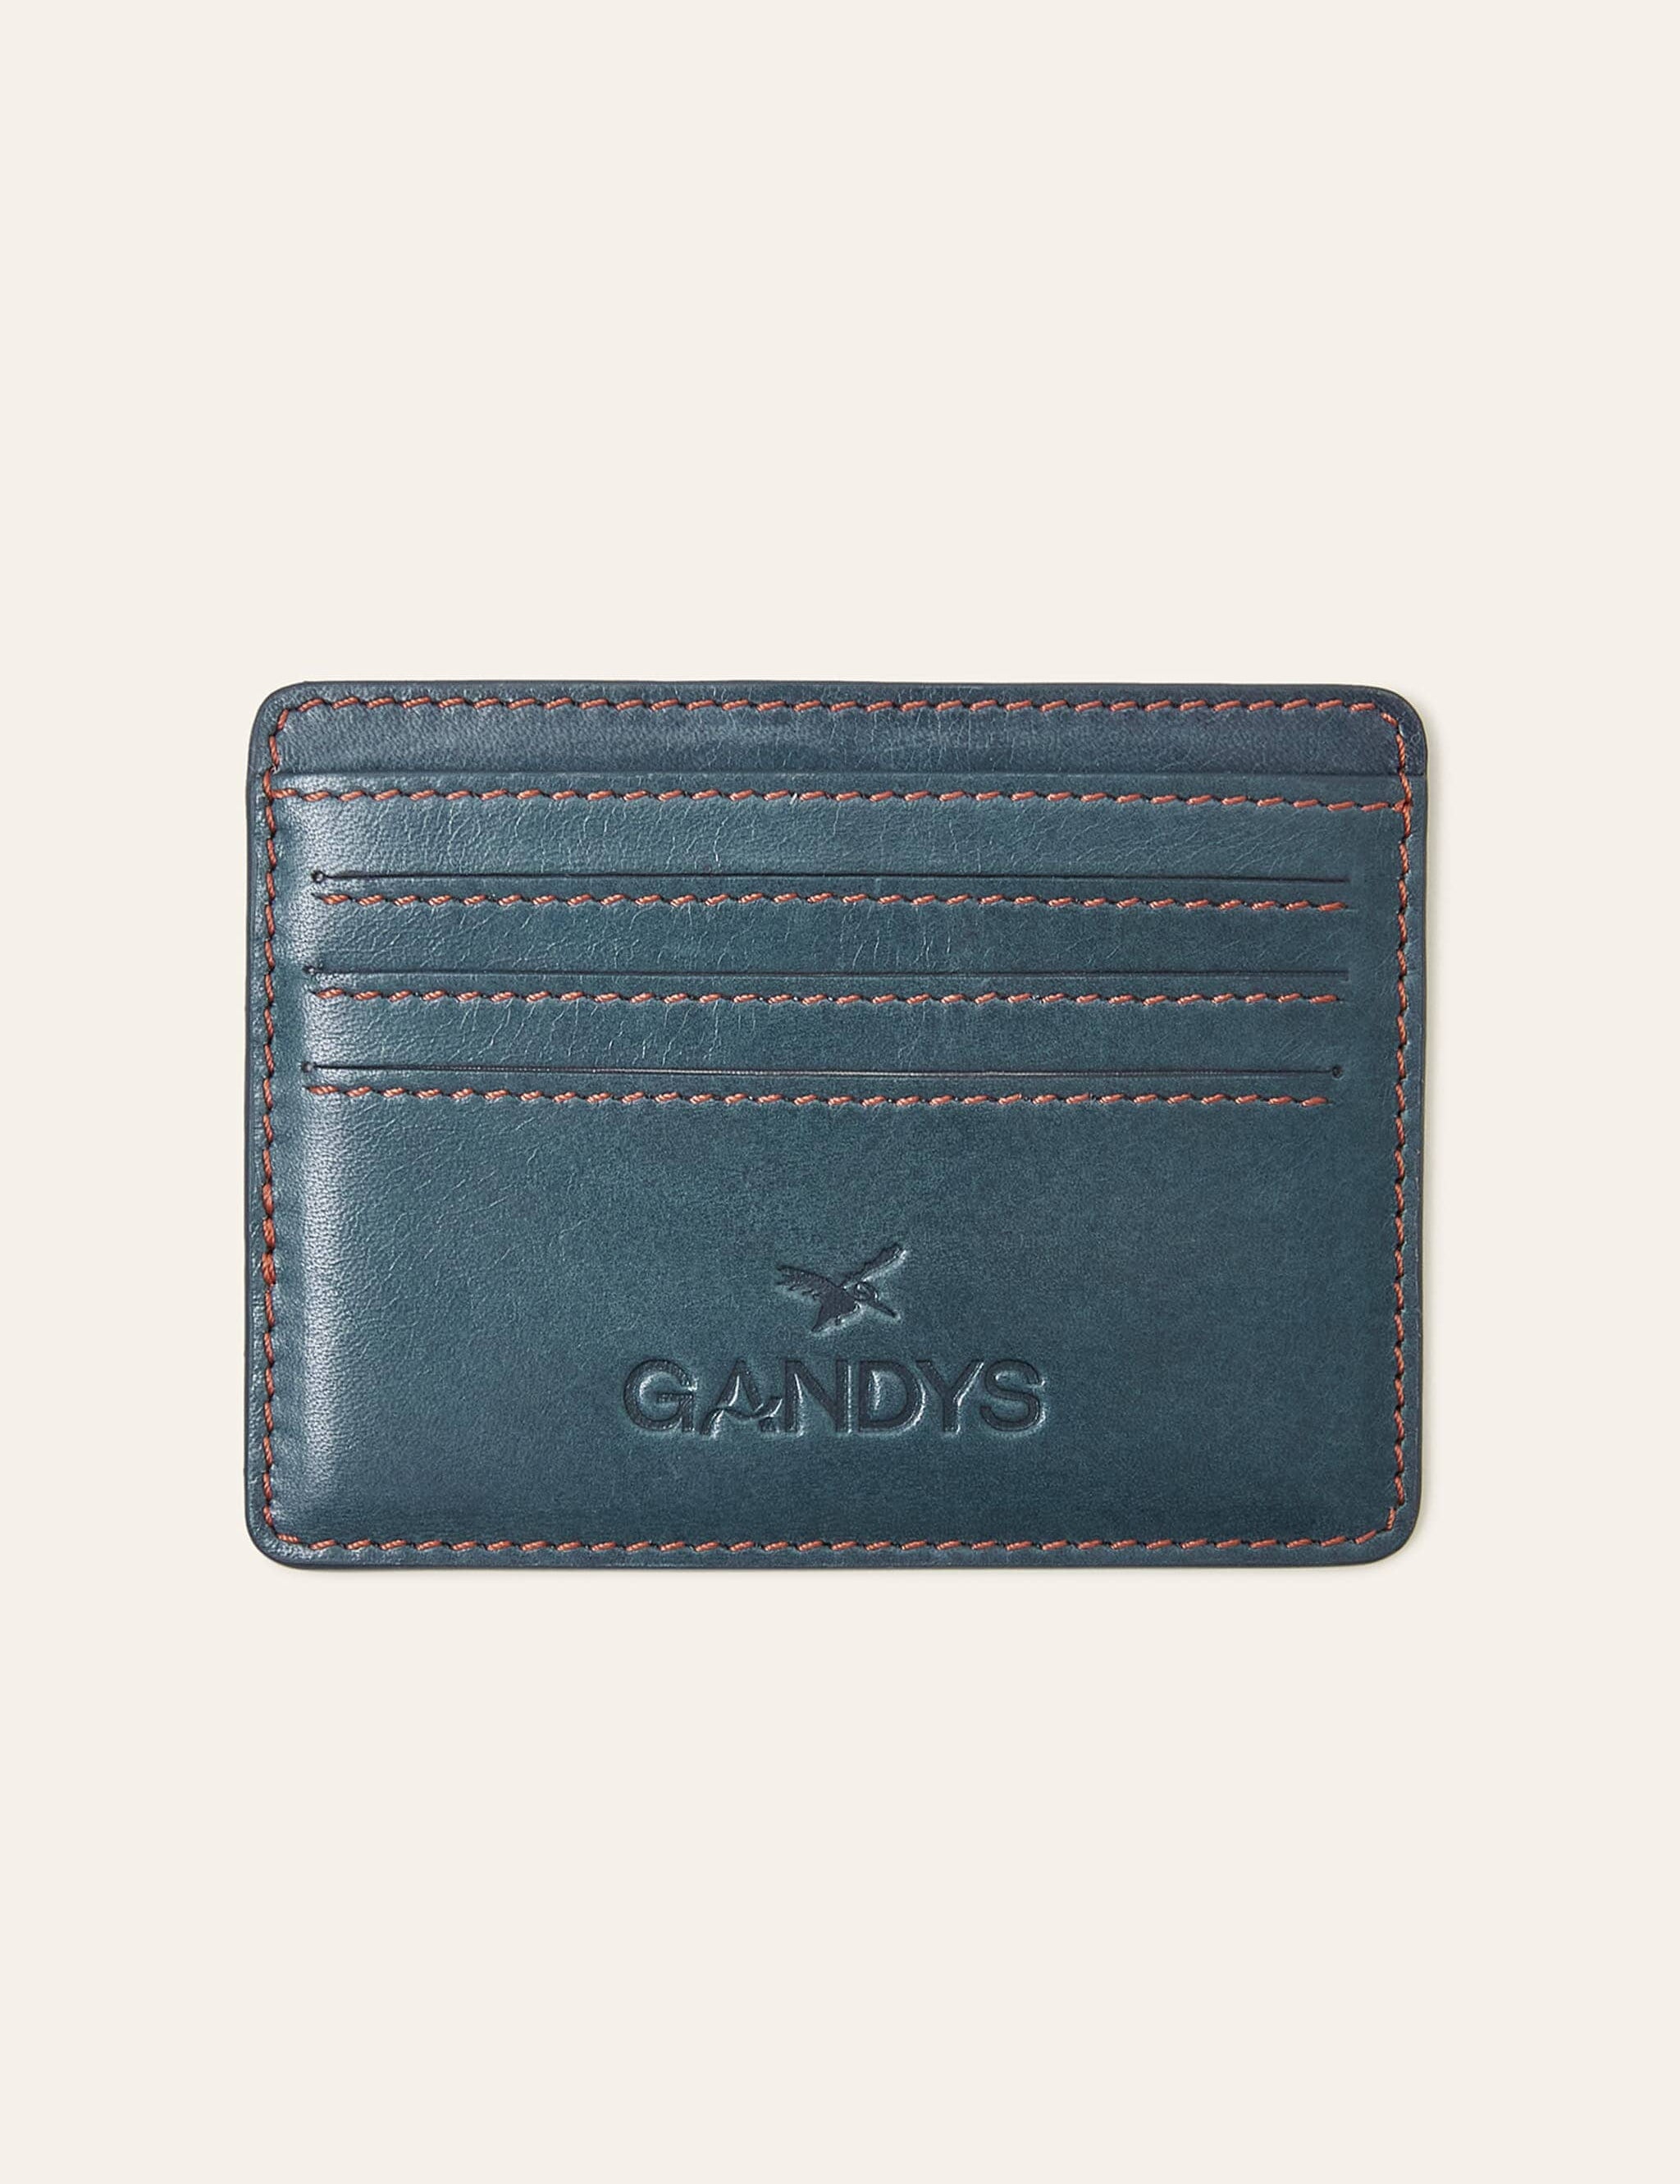 Gandys card holder